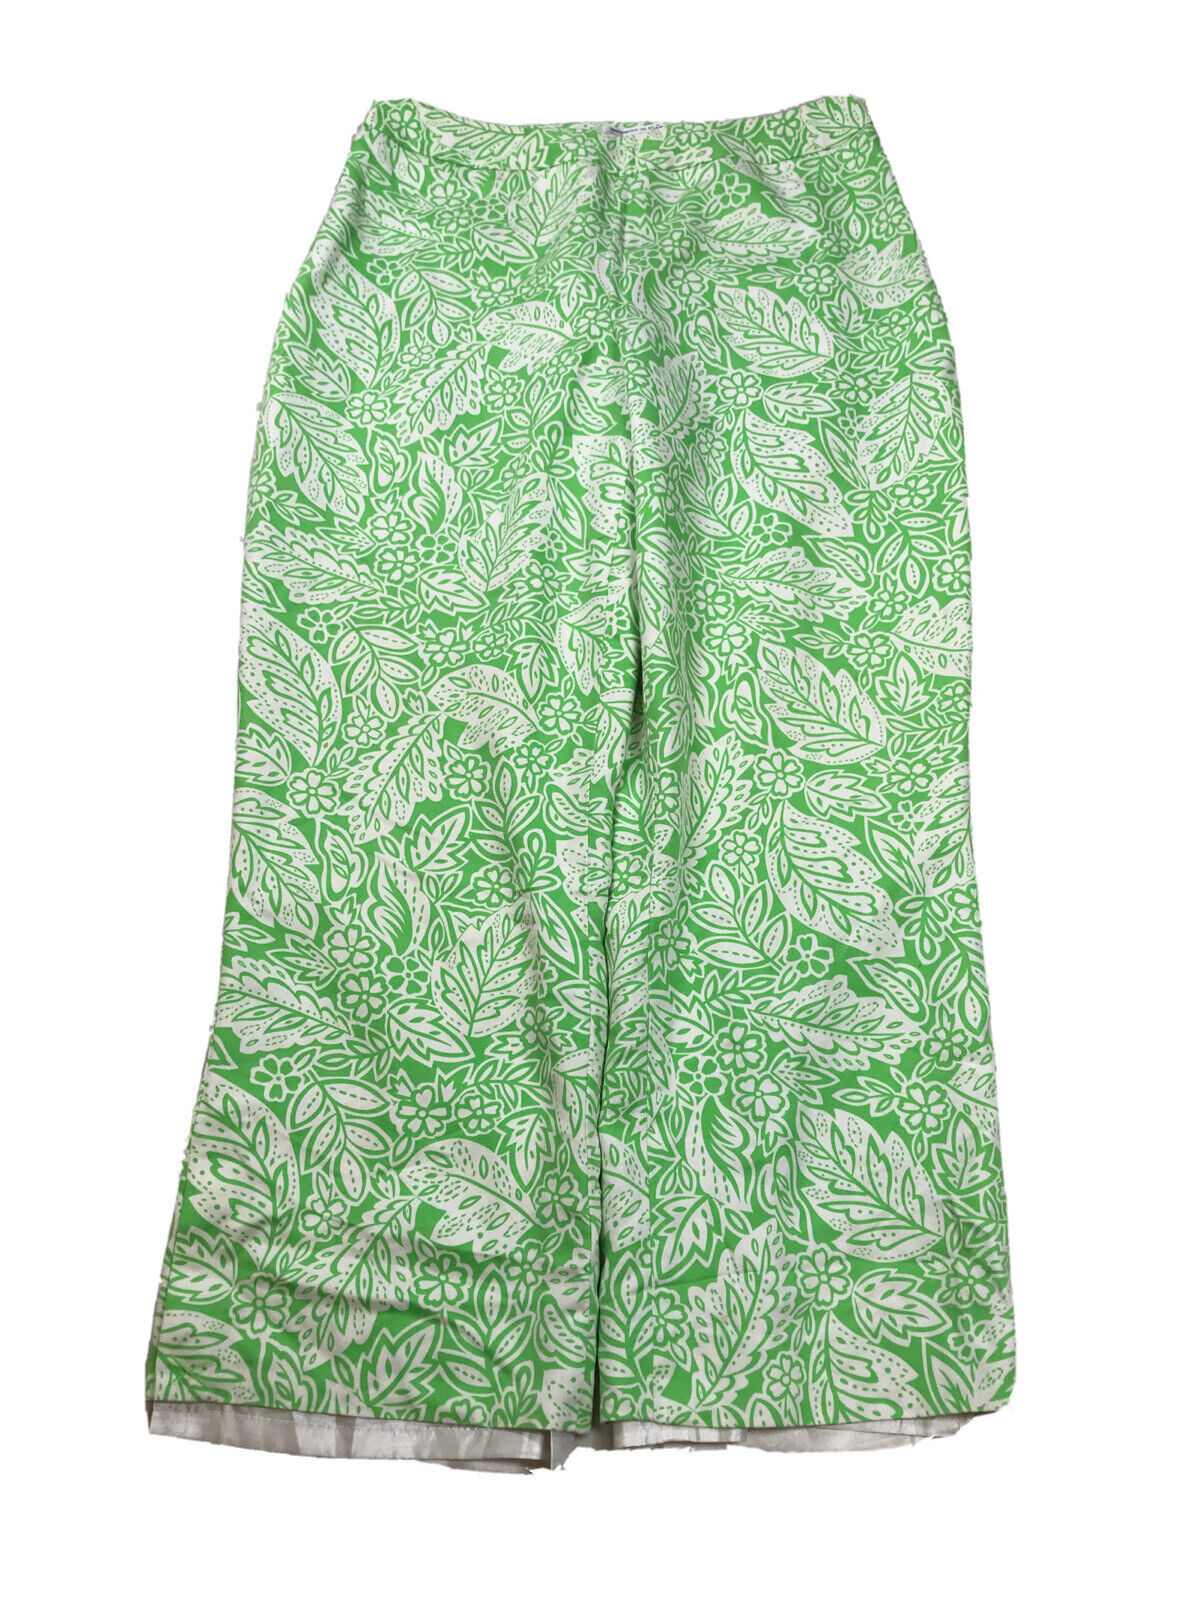 Pendelton Women's Green Floral Lined Side Zip Summer Pants - 8